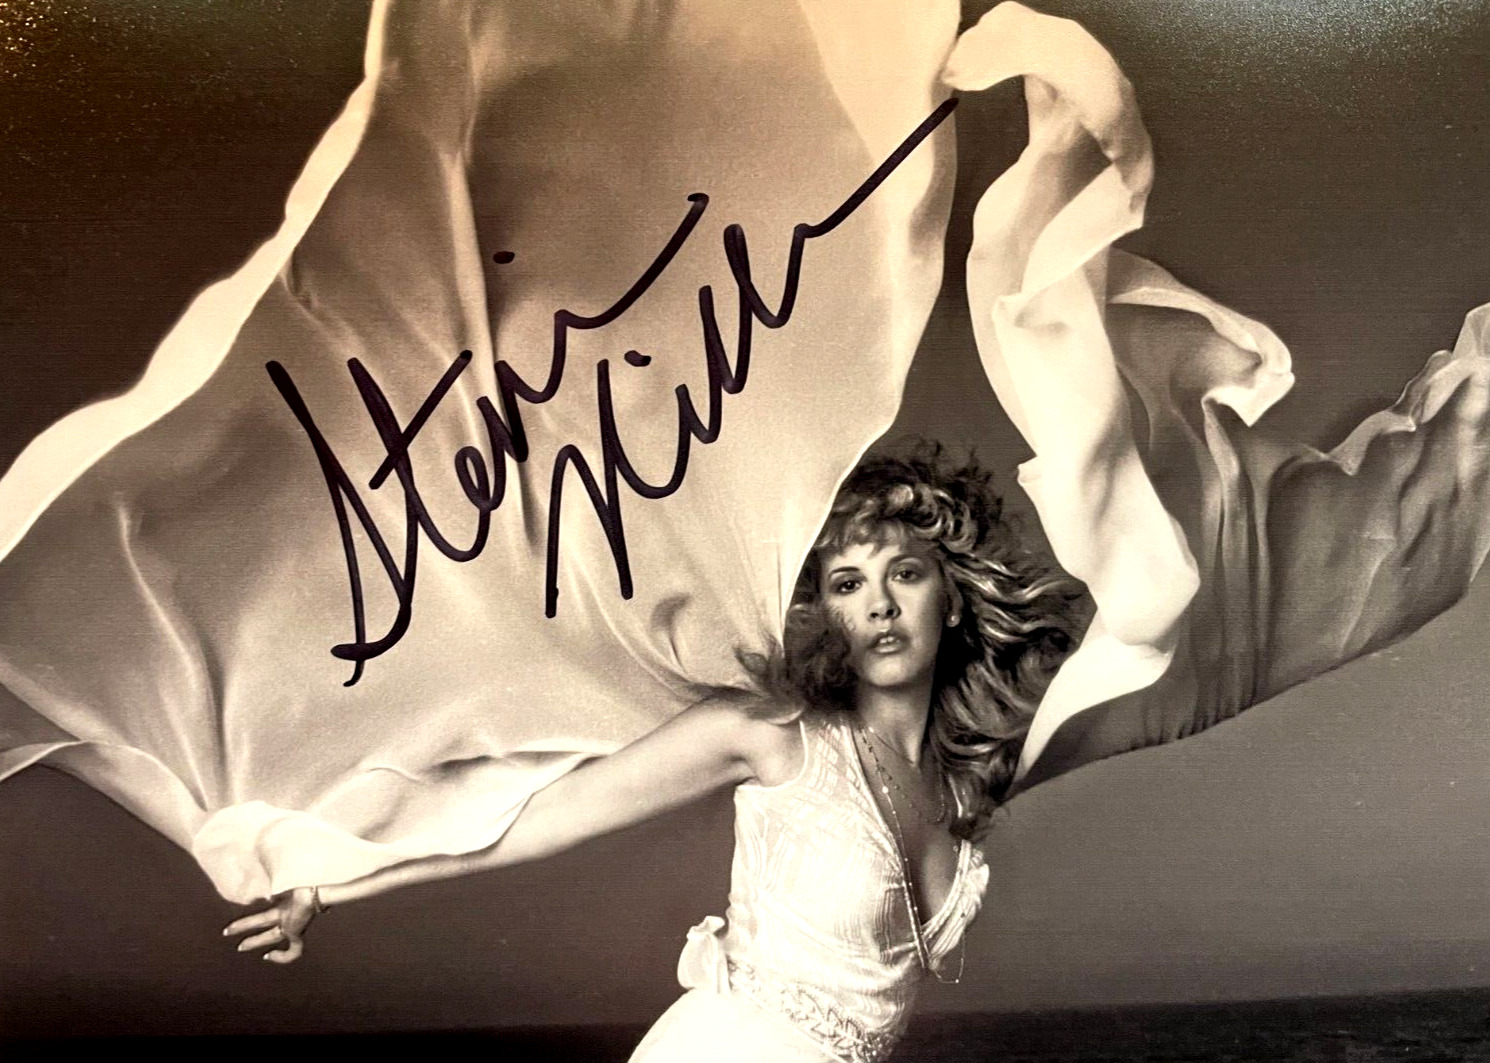 Stevie Nicks (Fleetwood Mac) Hand Signed 7x5 inch Color Photo Original Autograph